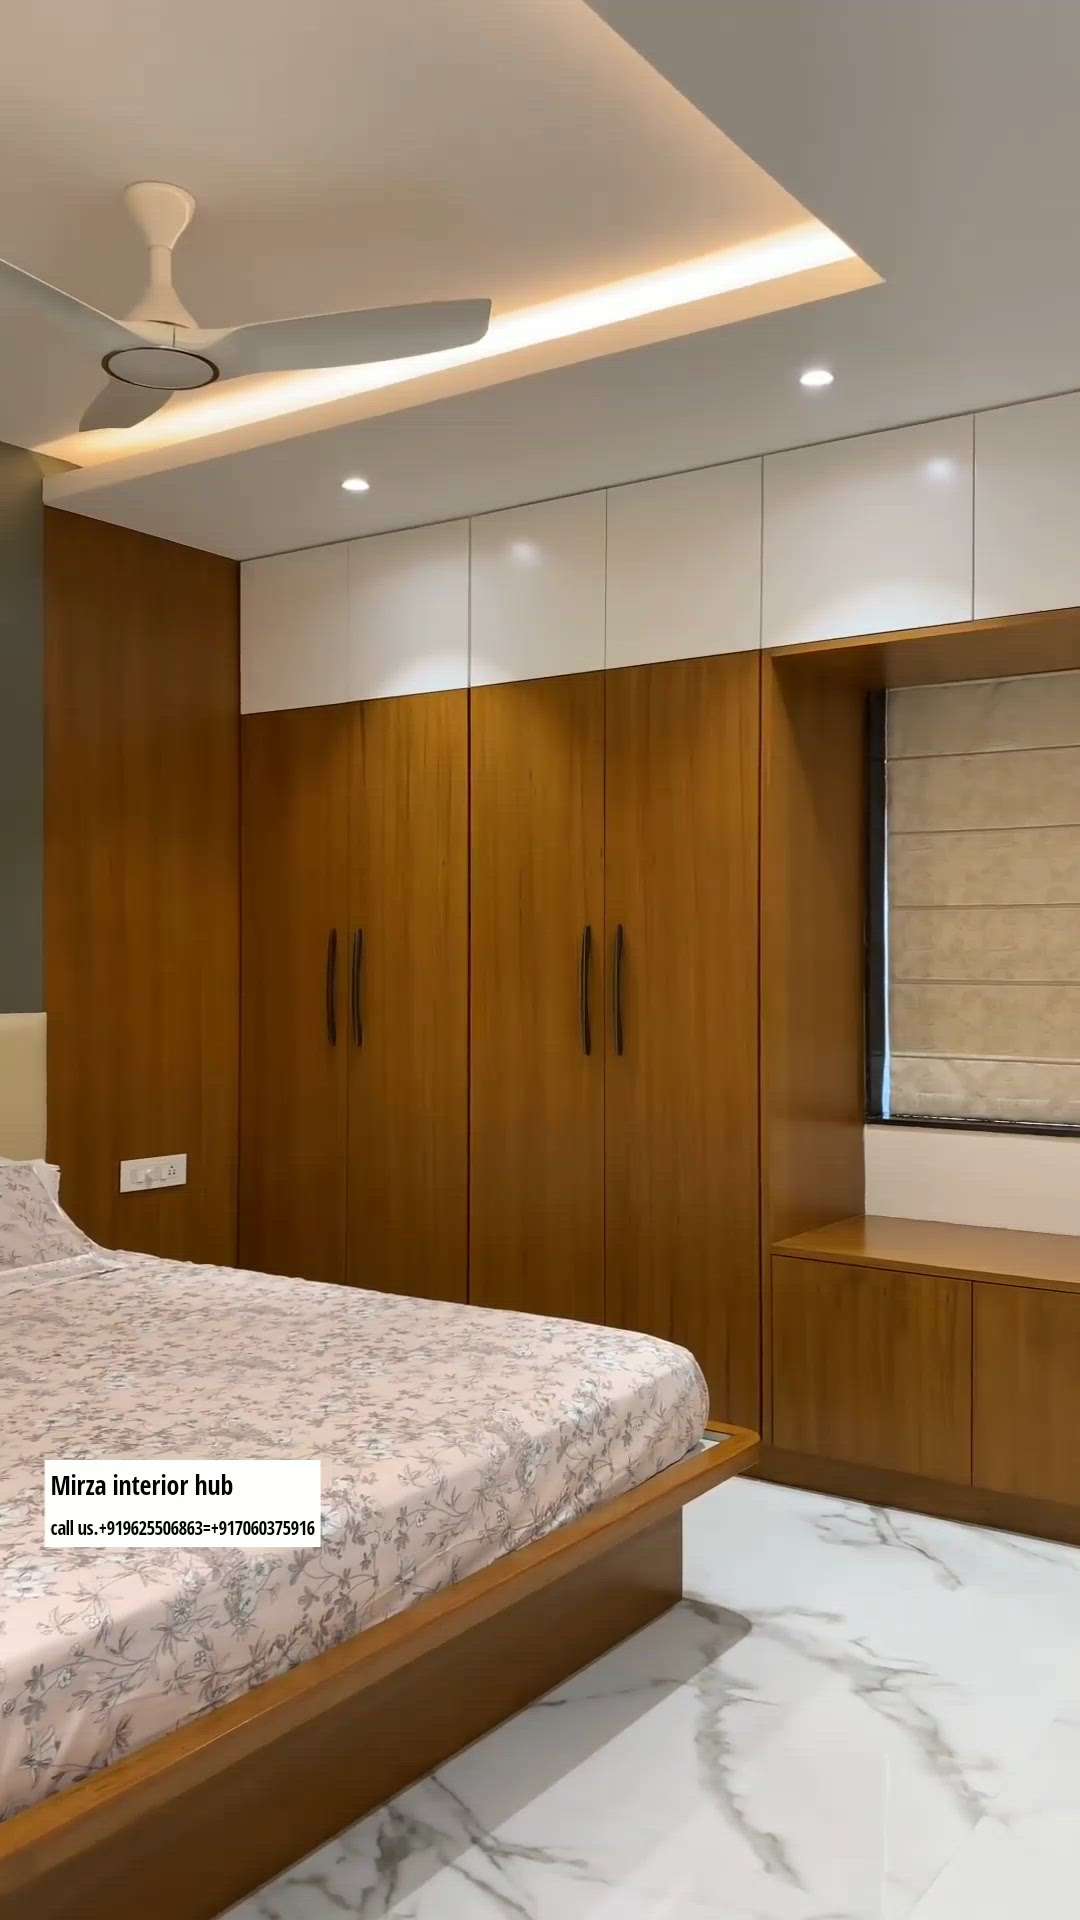 #BedroomDecor  #WardrobeDesigns  #MasterBedroom  #wallpanelingdesign  #TVStand  #tvcabinet  #HomeDecor  #InteriorDesigner  #furnitures work karne ke liye contact kare 
whats.+919625506863
call.+917060375916 Saquib Mirza